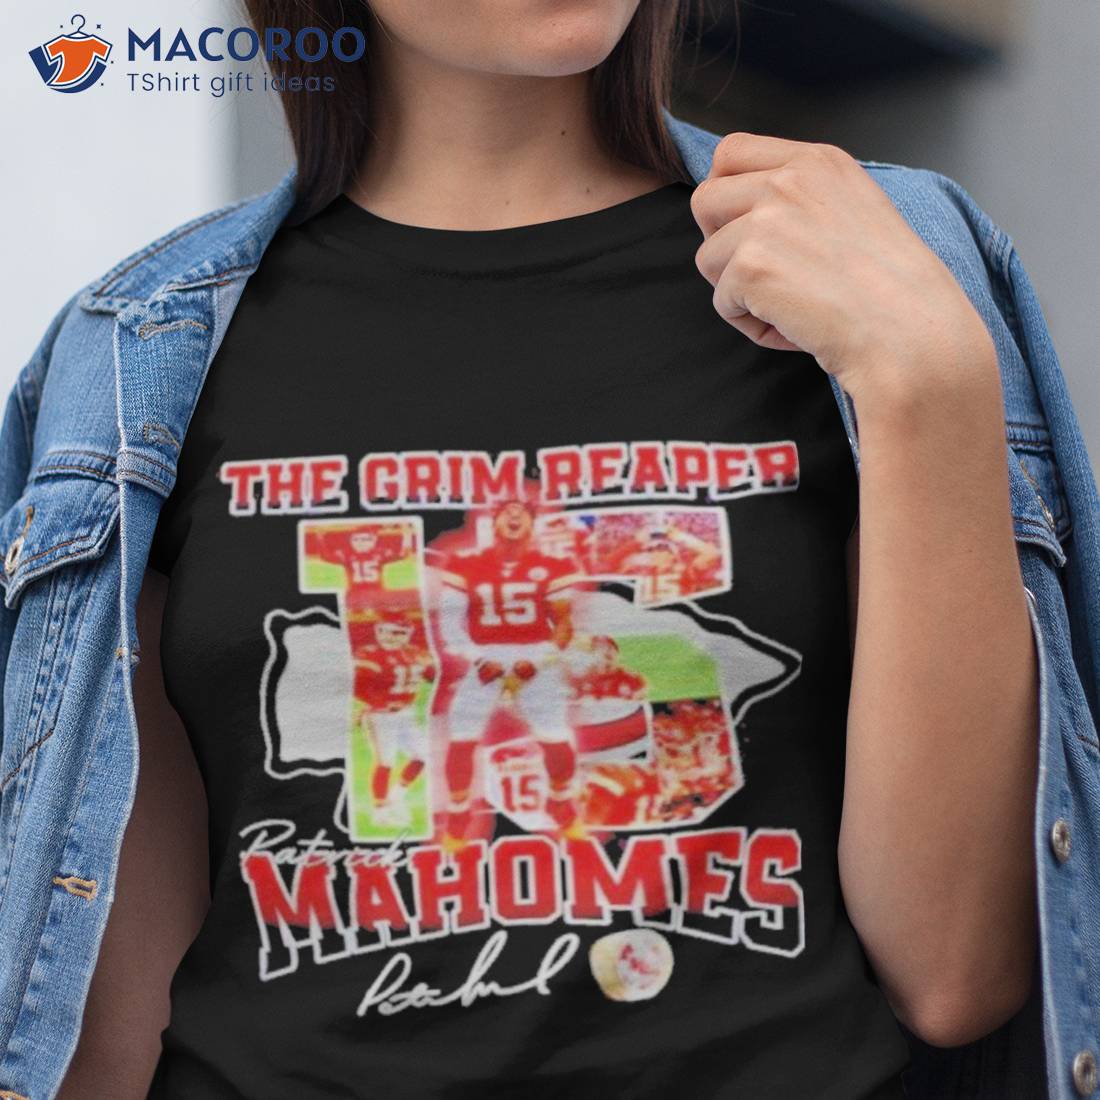 mahomes reaper shirt